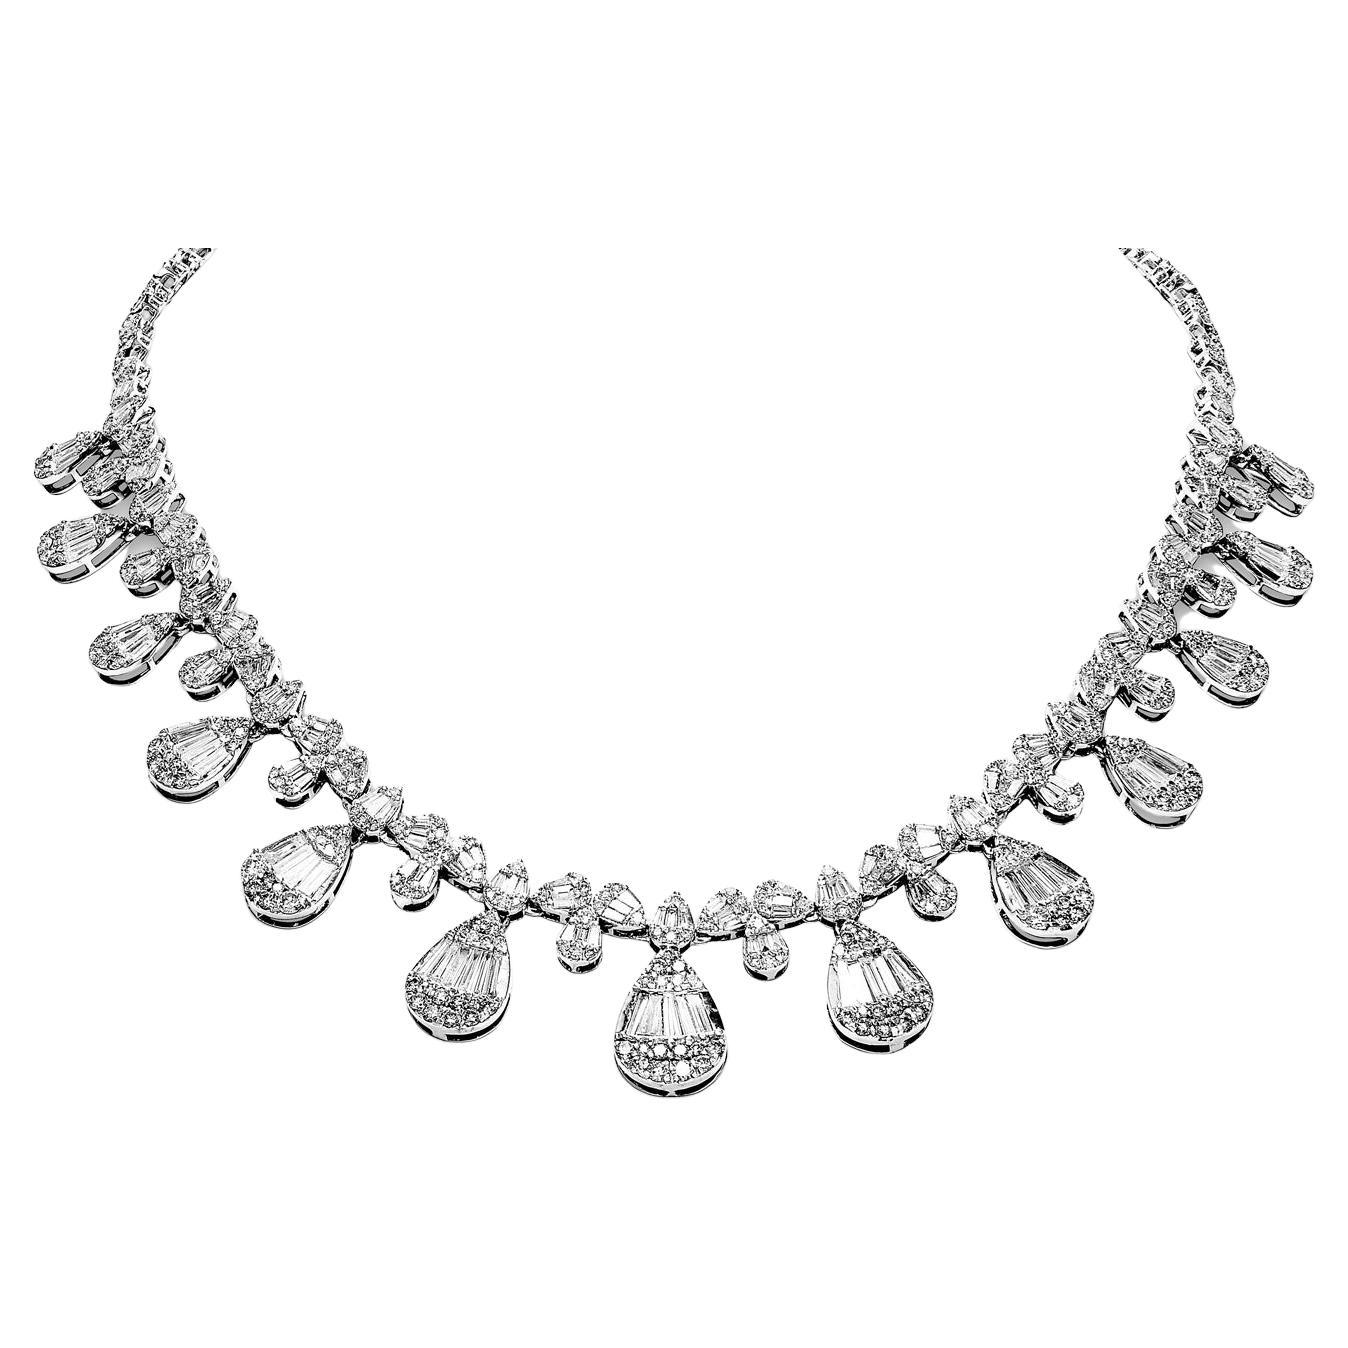 17 Carat Combined Mix Shape Diamond Bib Necklace Certified